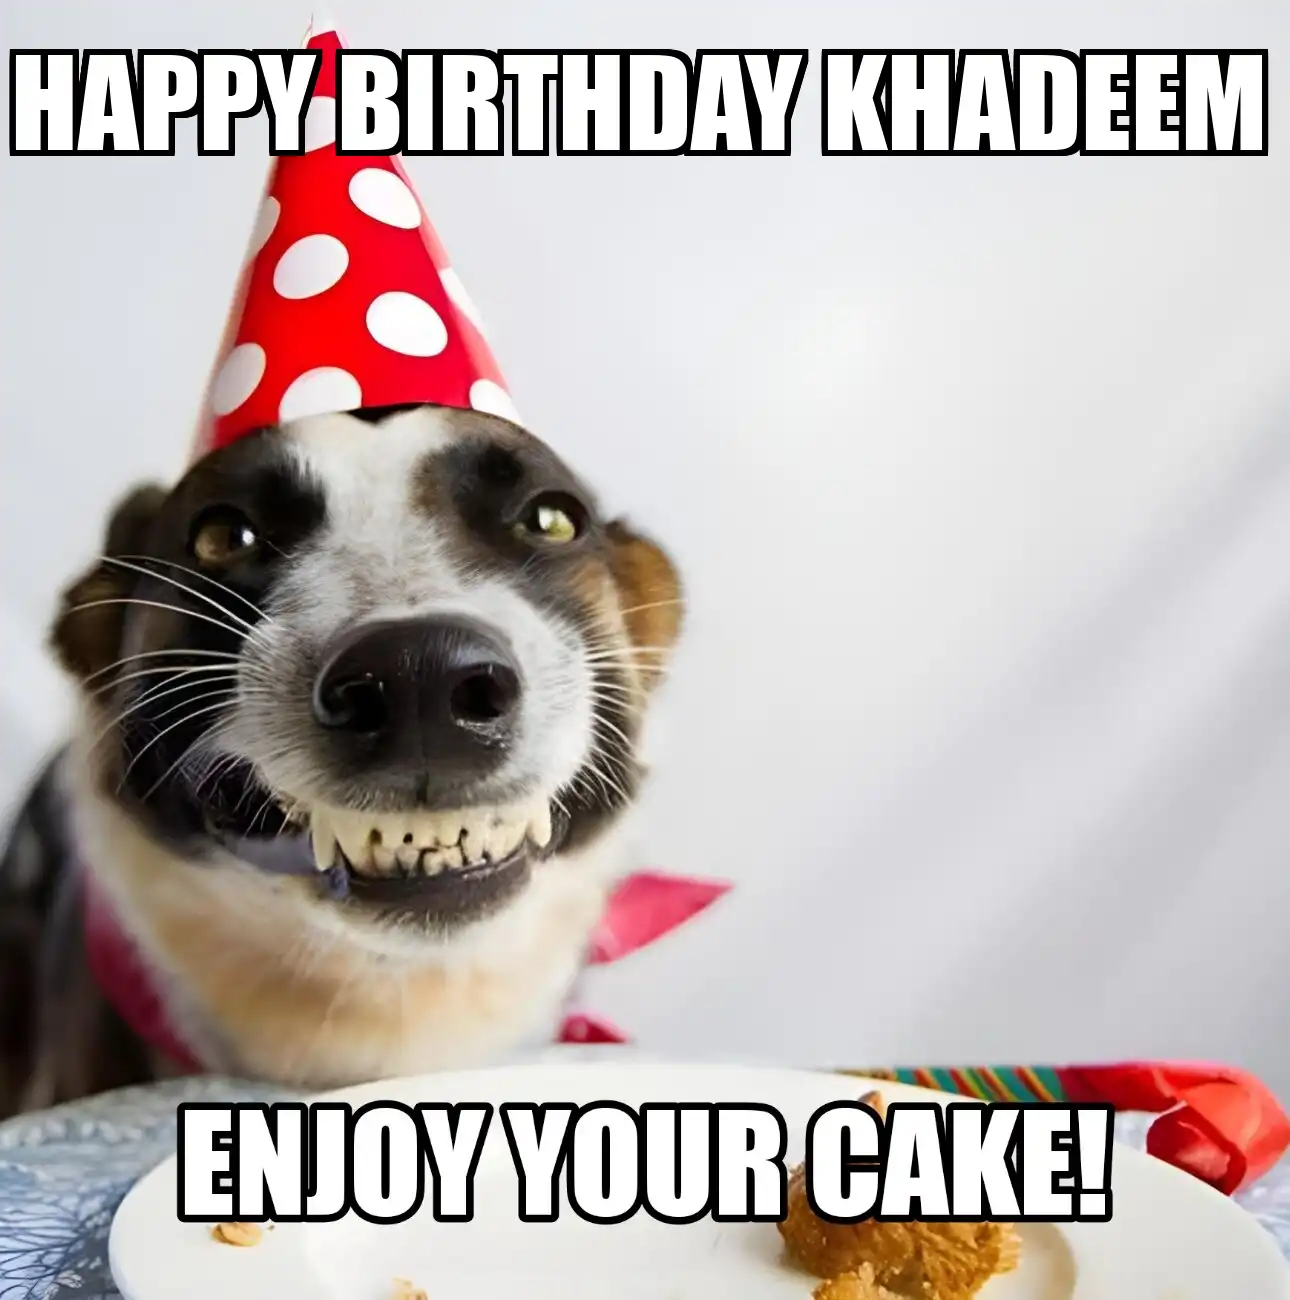 Happy Birthday Khadeem Enjoy Your Cake Dog Meme